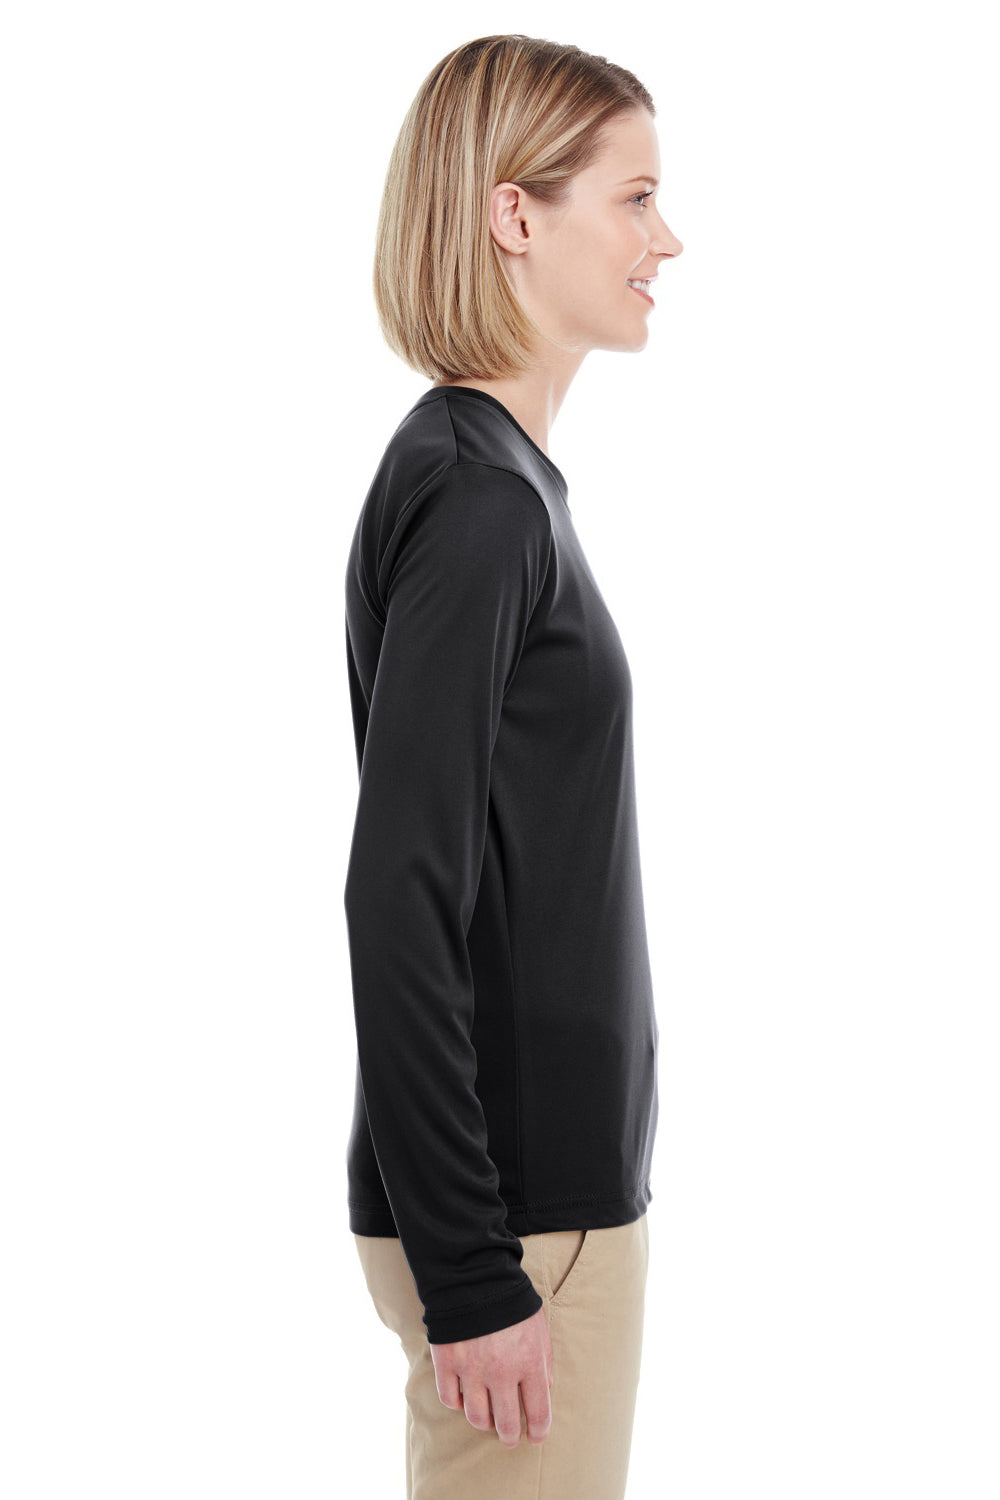 UltraClub 8622W Womens Cool & Dry Performance Moisture Wicking Long Sleeve Crewneck T-Shirt Black Side